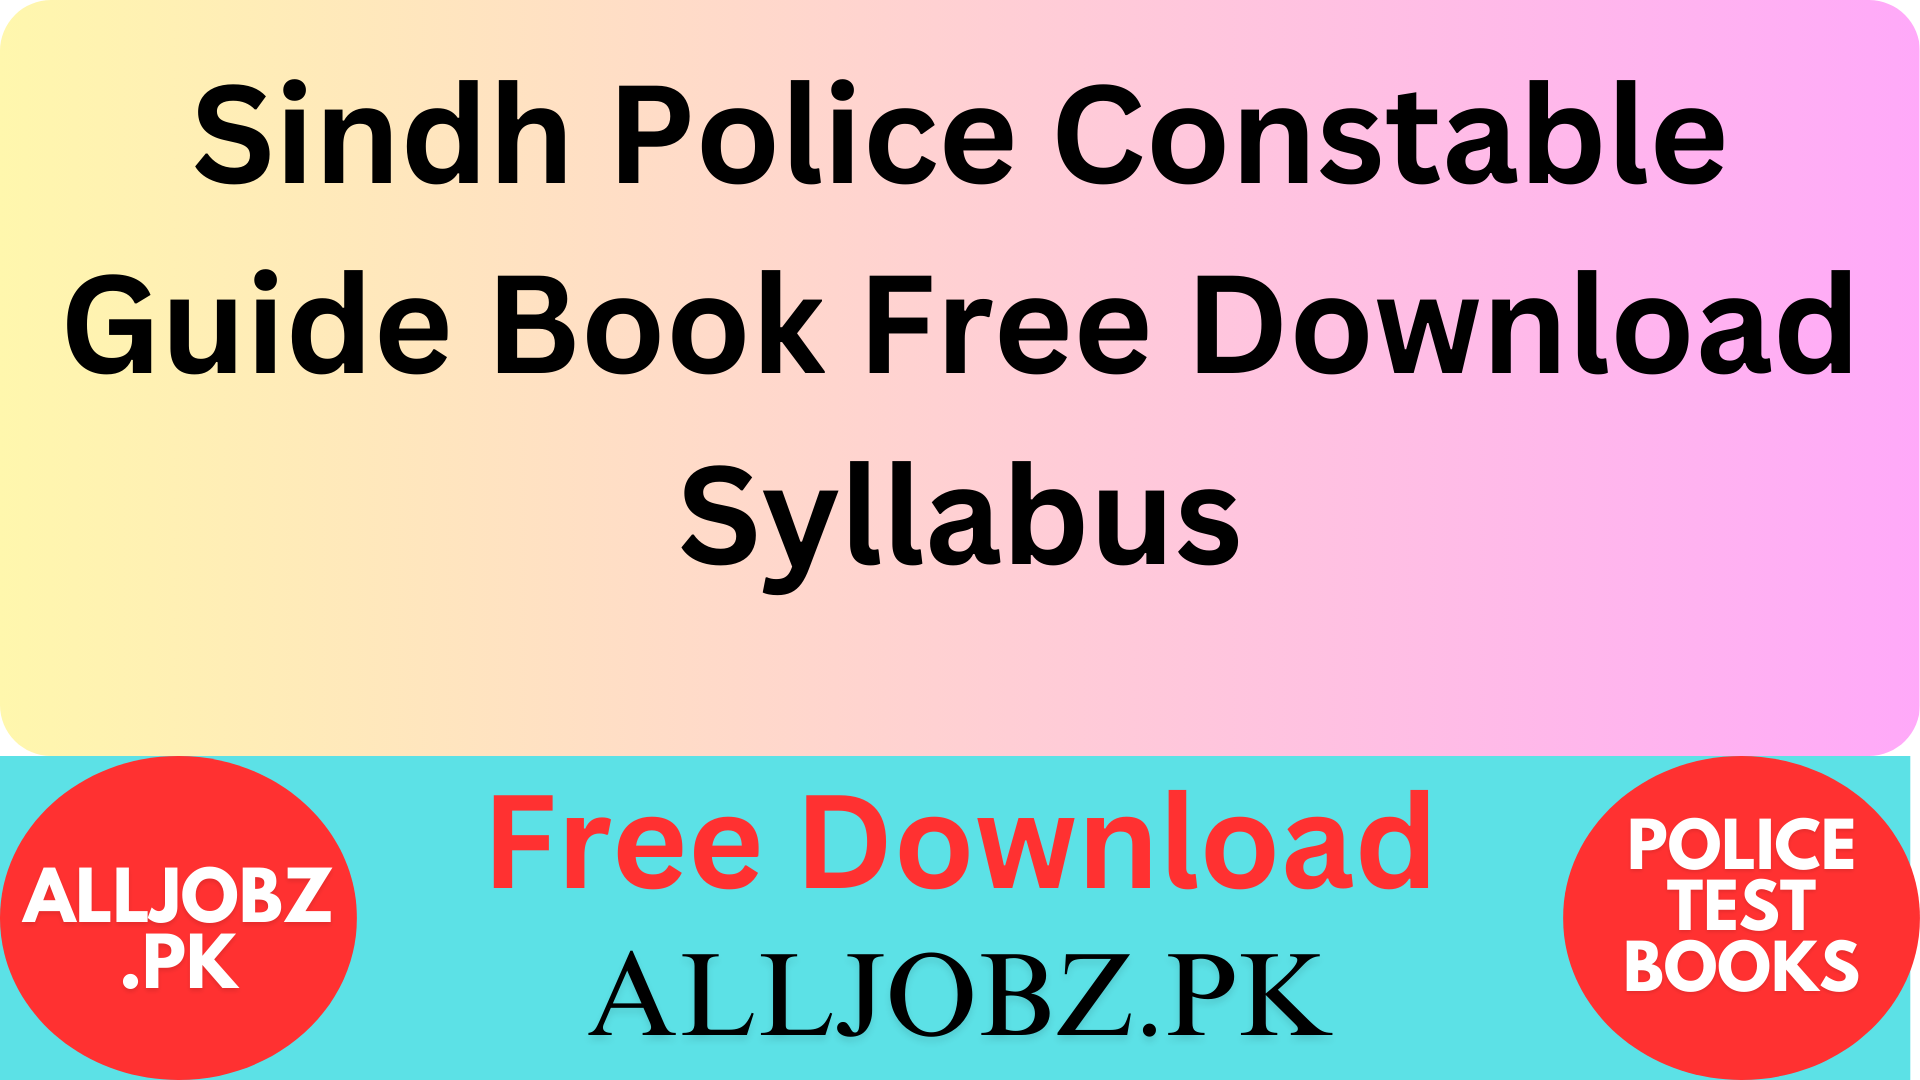 Sindh Police Constable Guide Book Free Download Syllabus